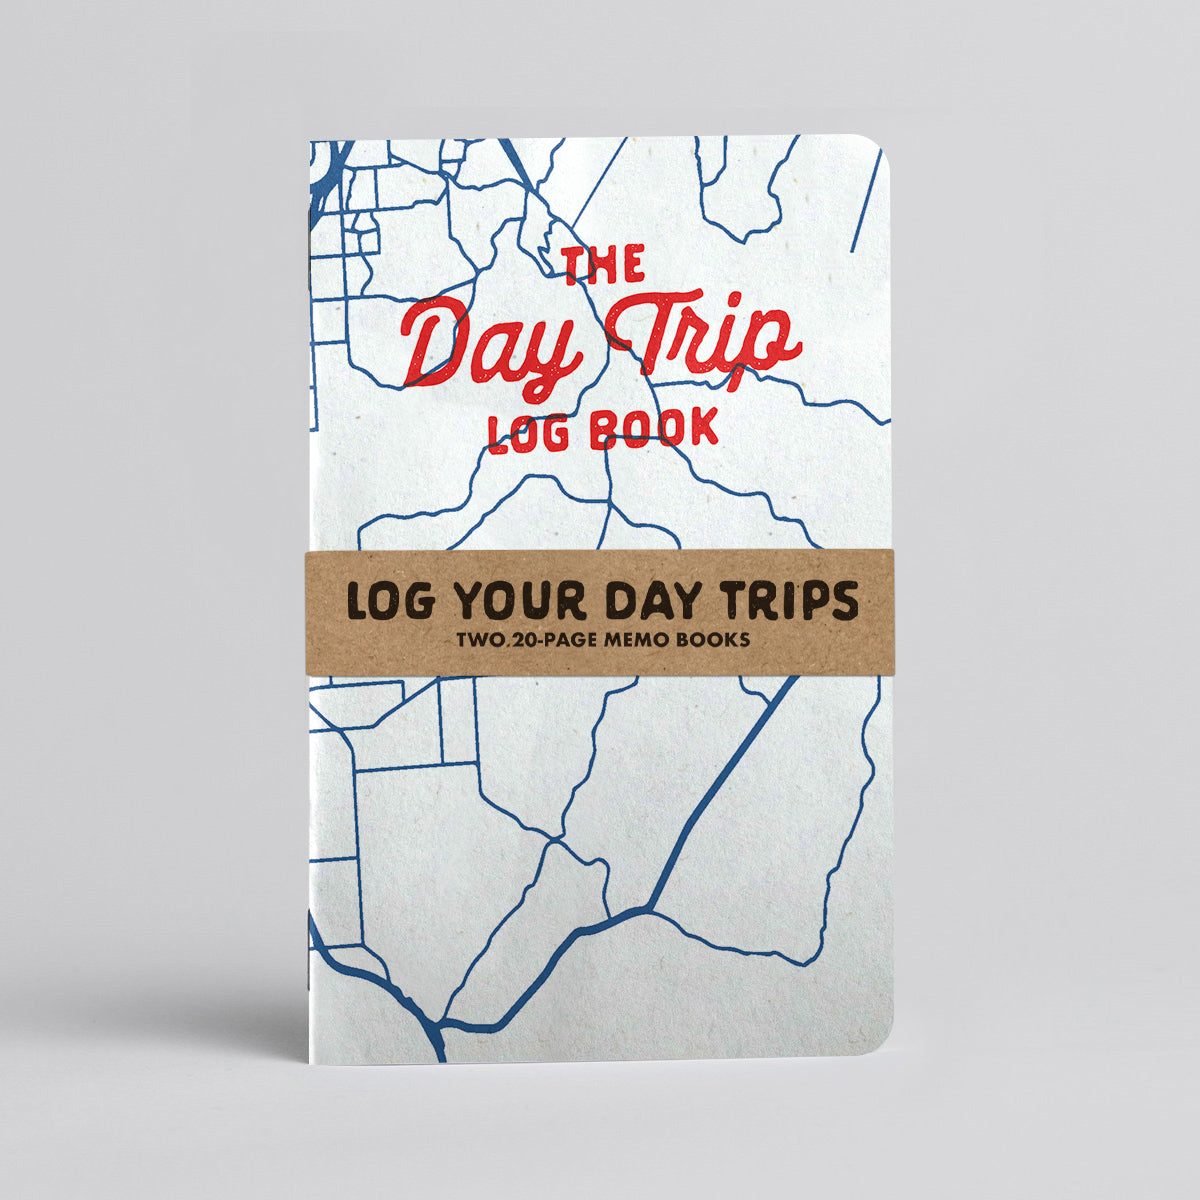 The Daytrip Log Book